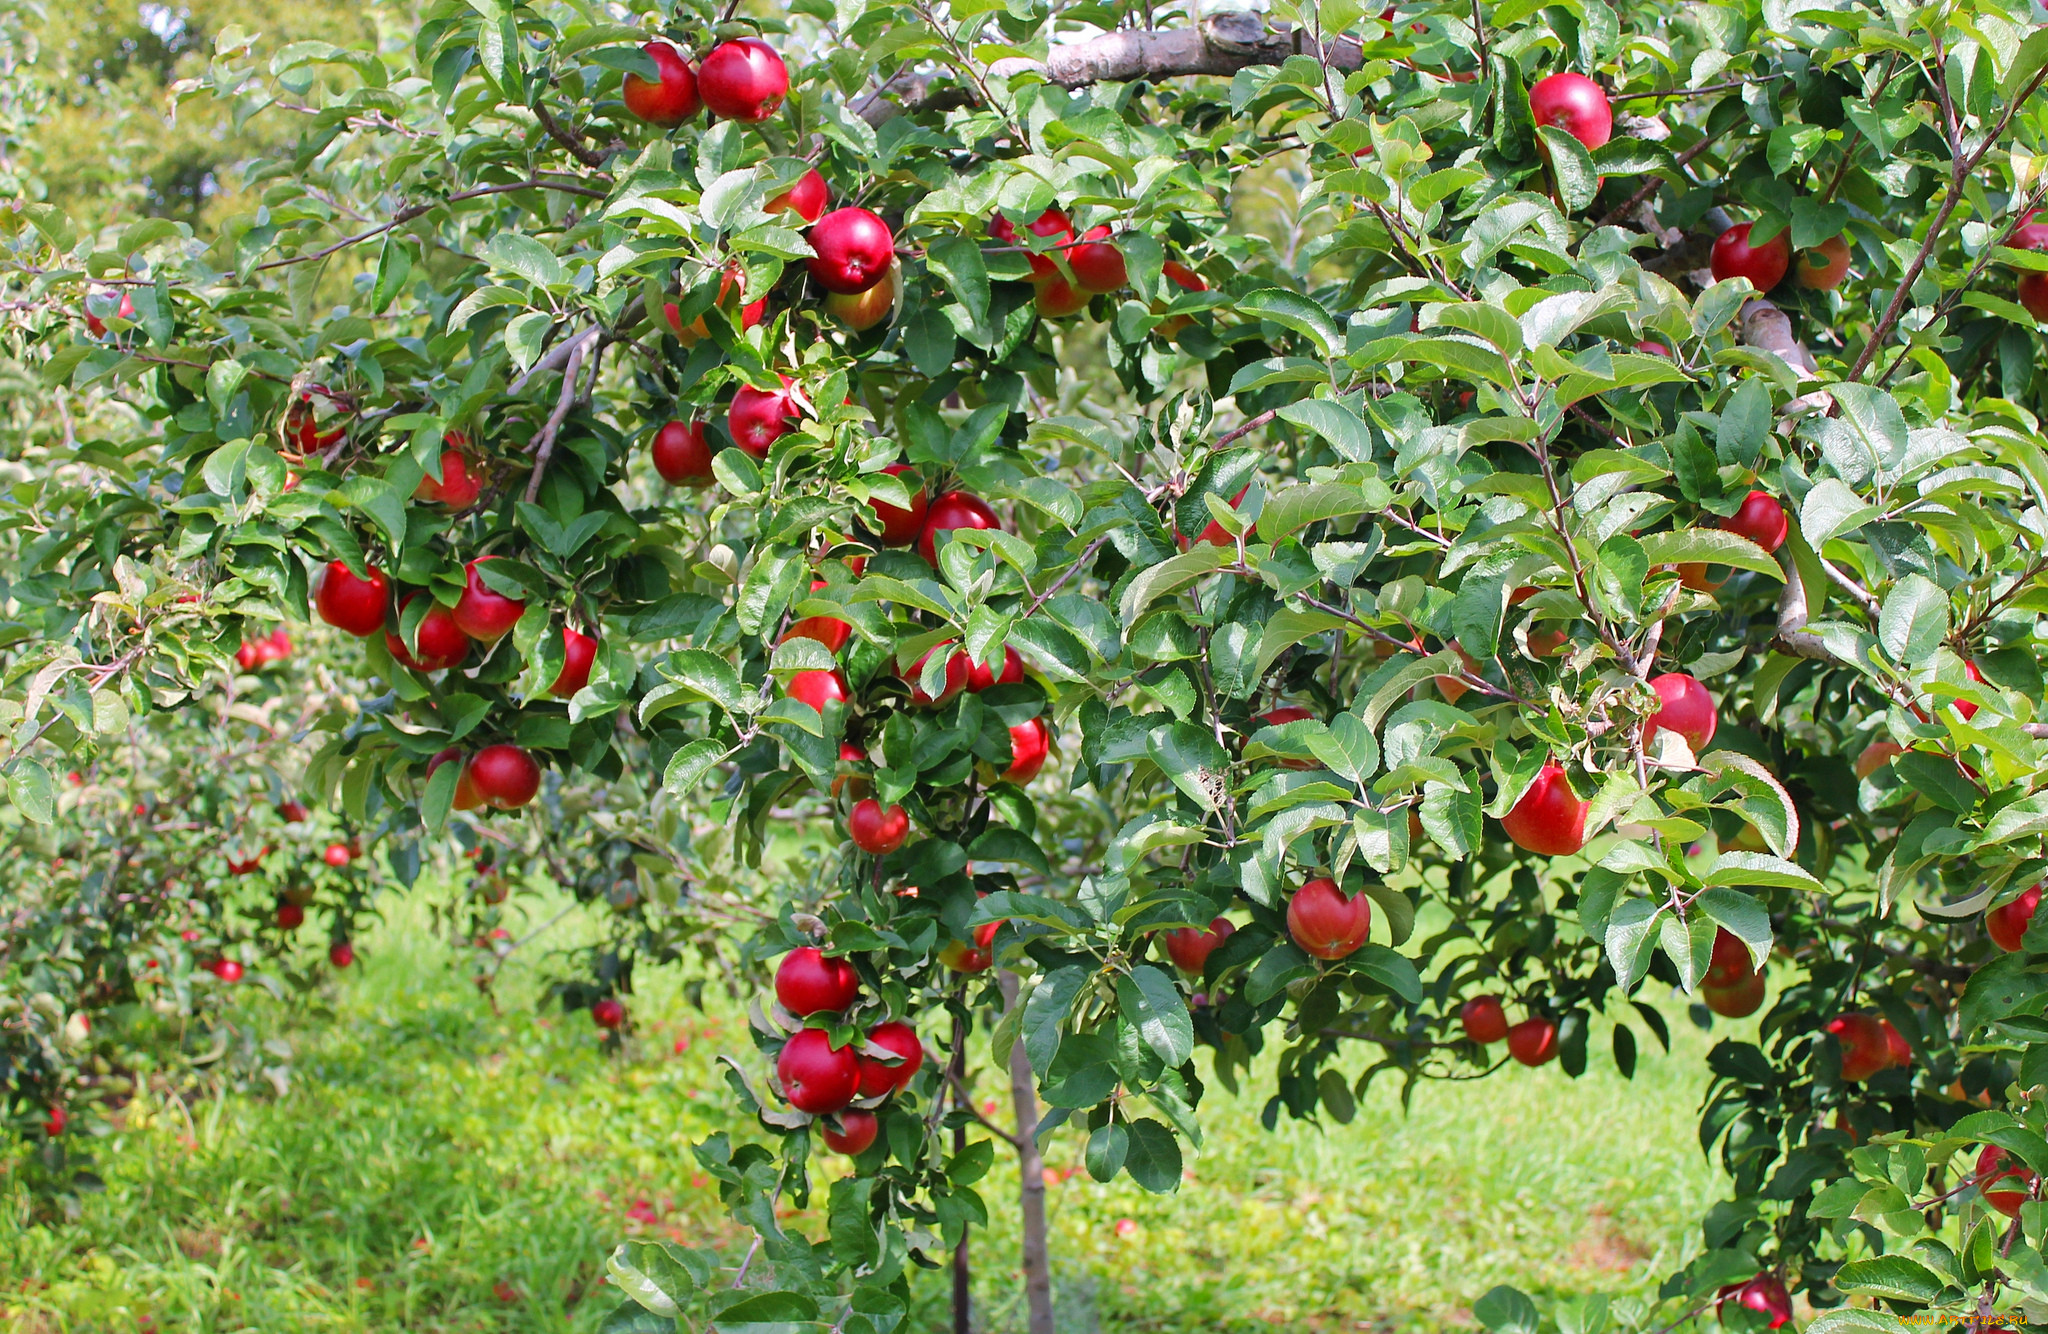 Яблоня дерево с плодами